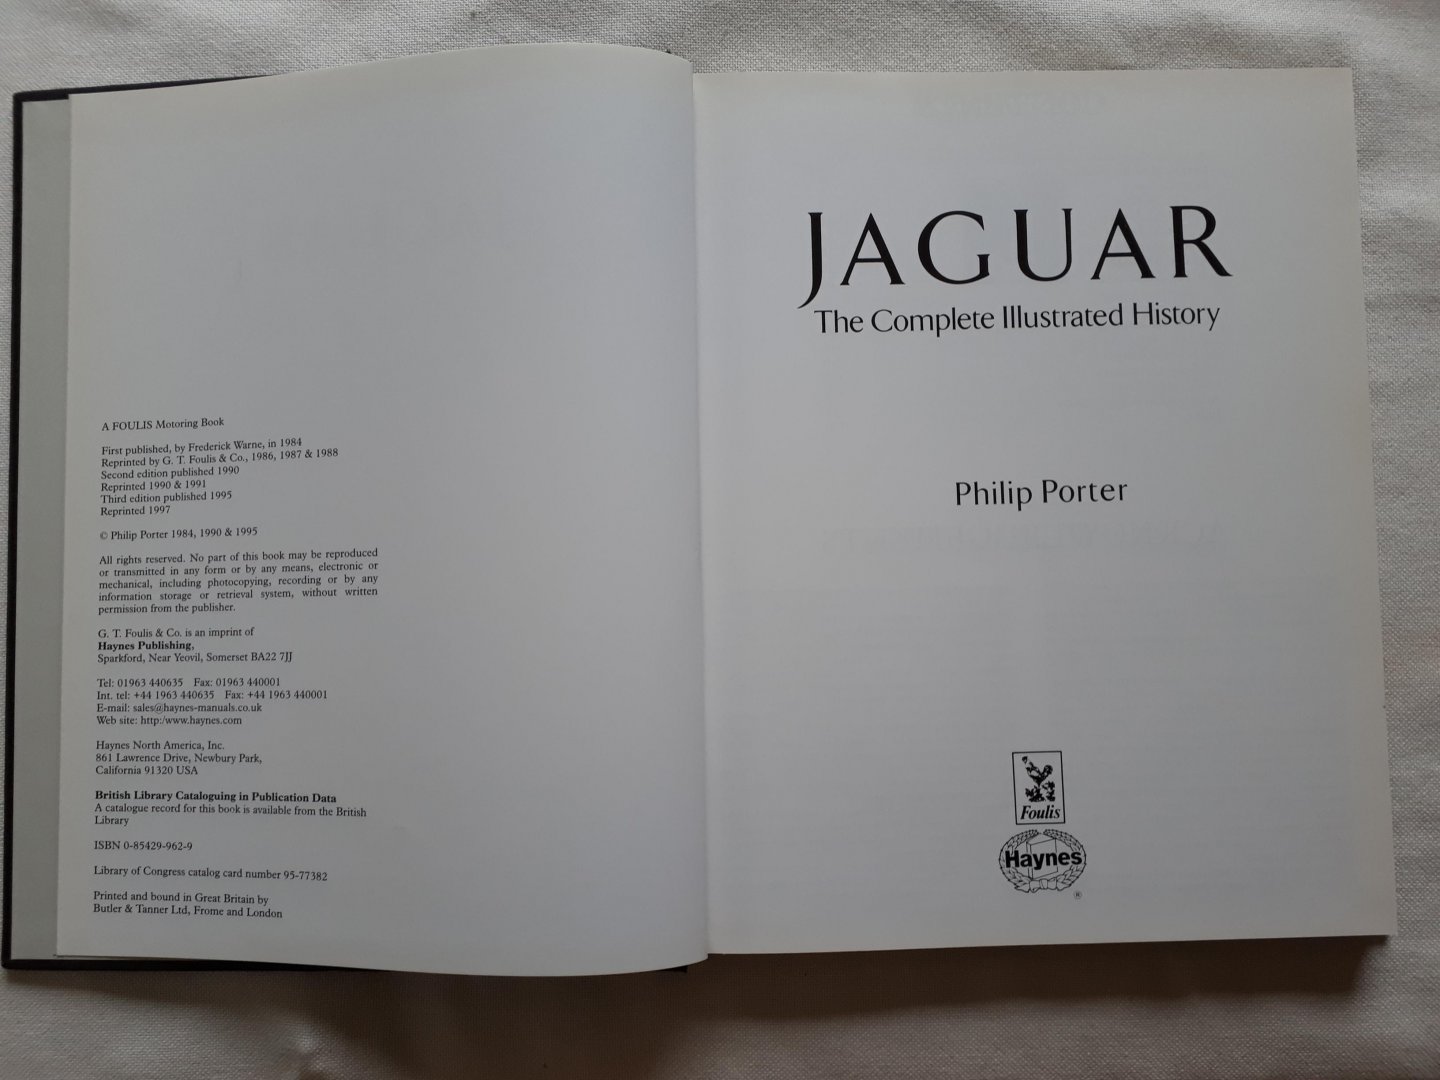 Porter, Philip - Jaguar, the complete illustrated history